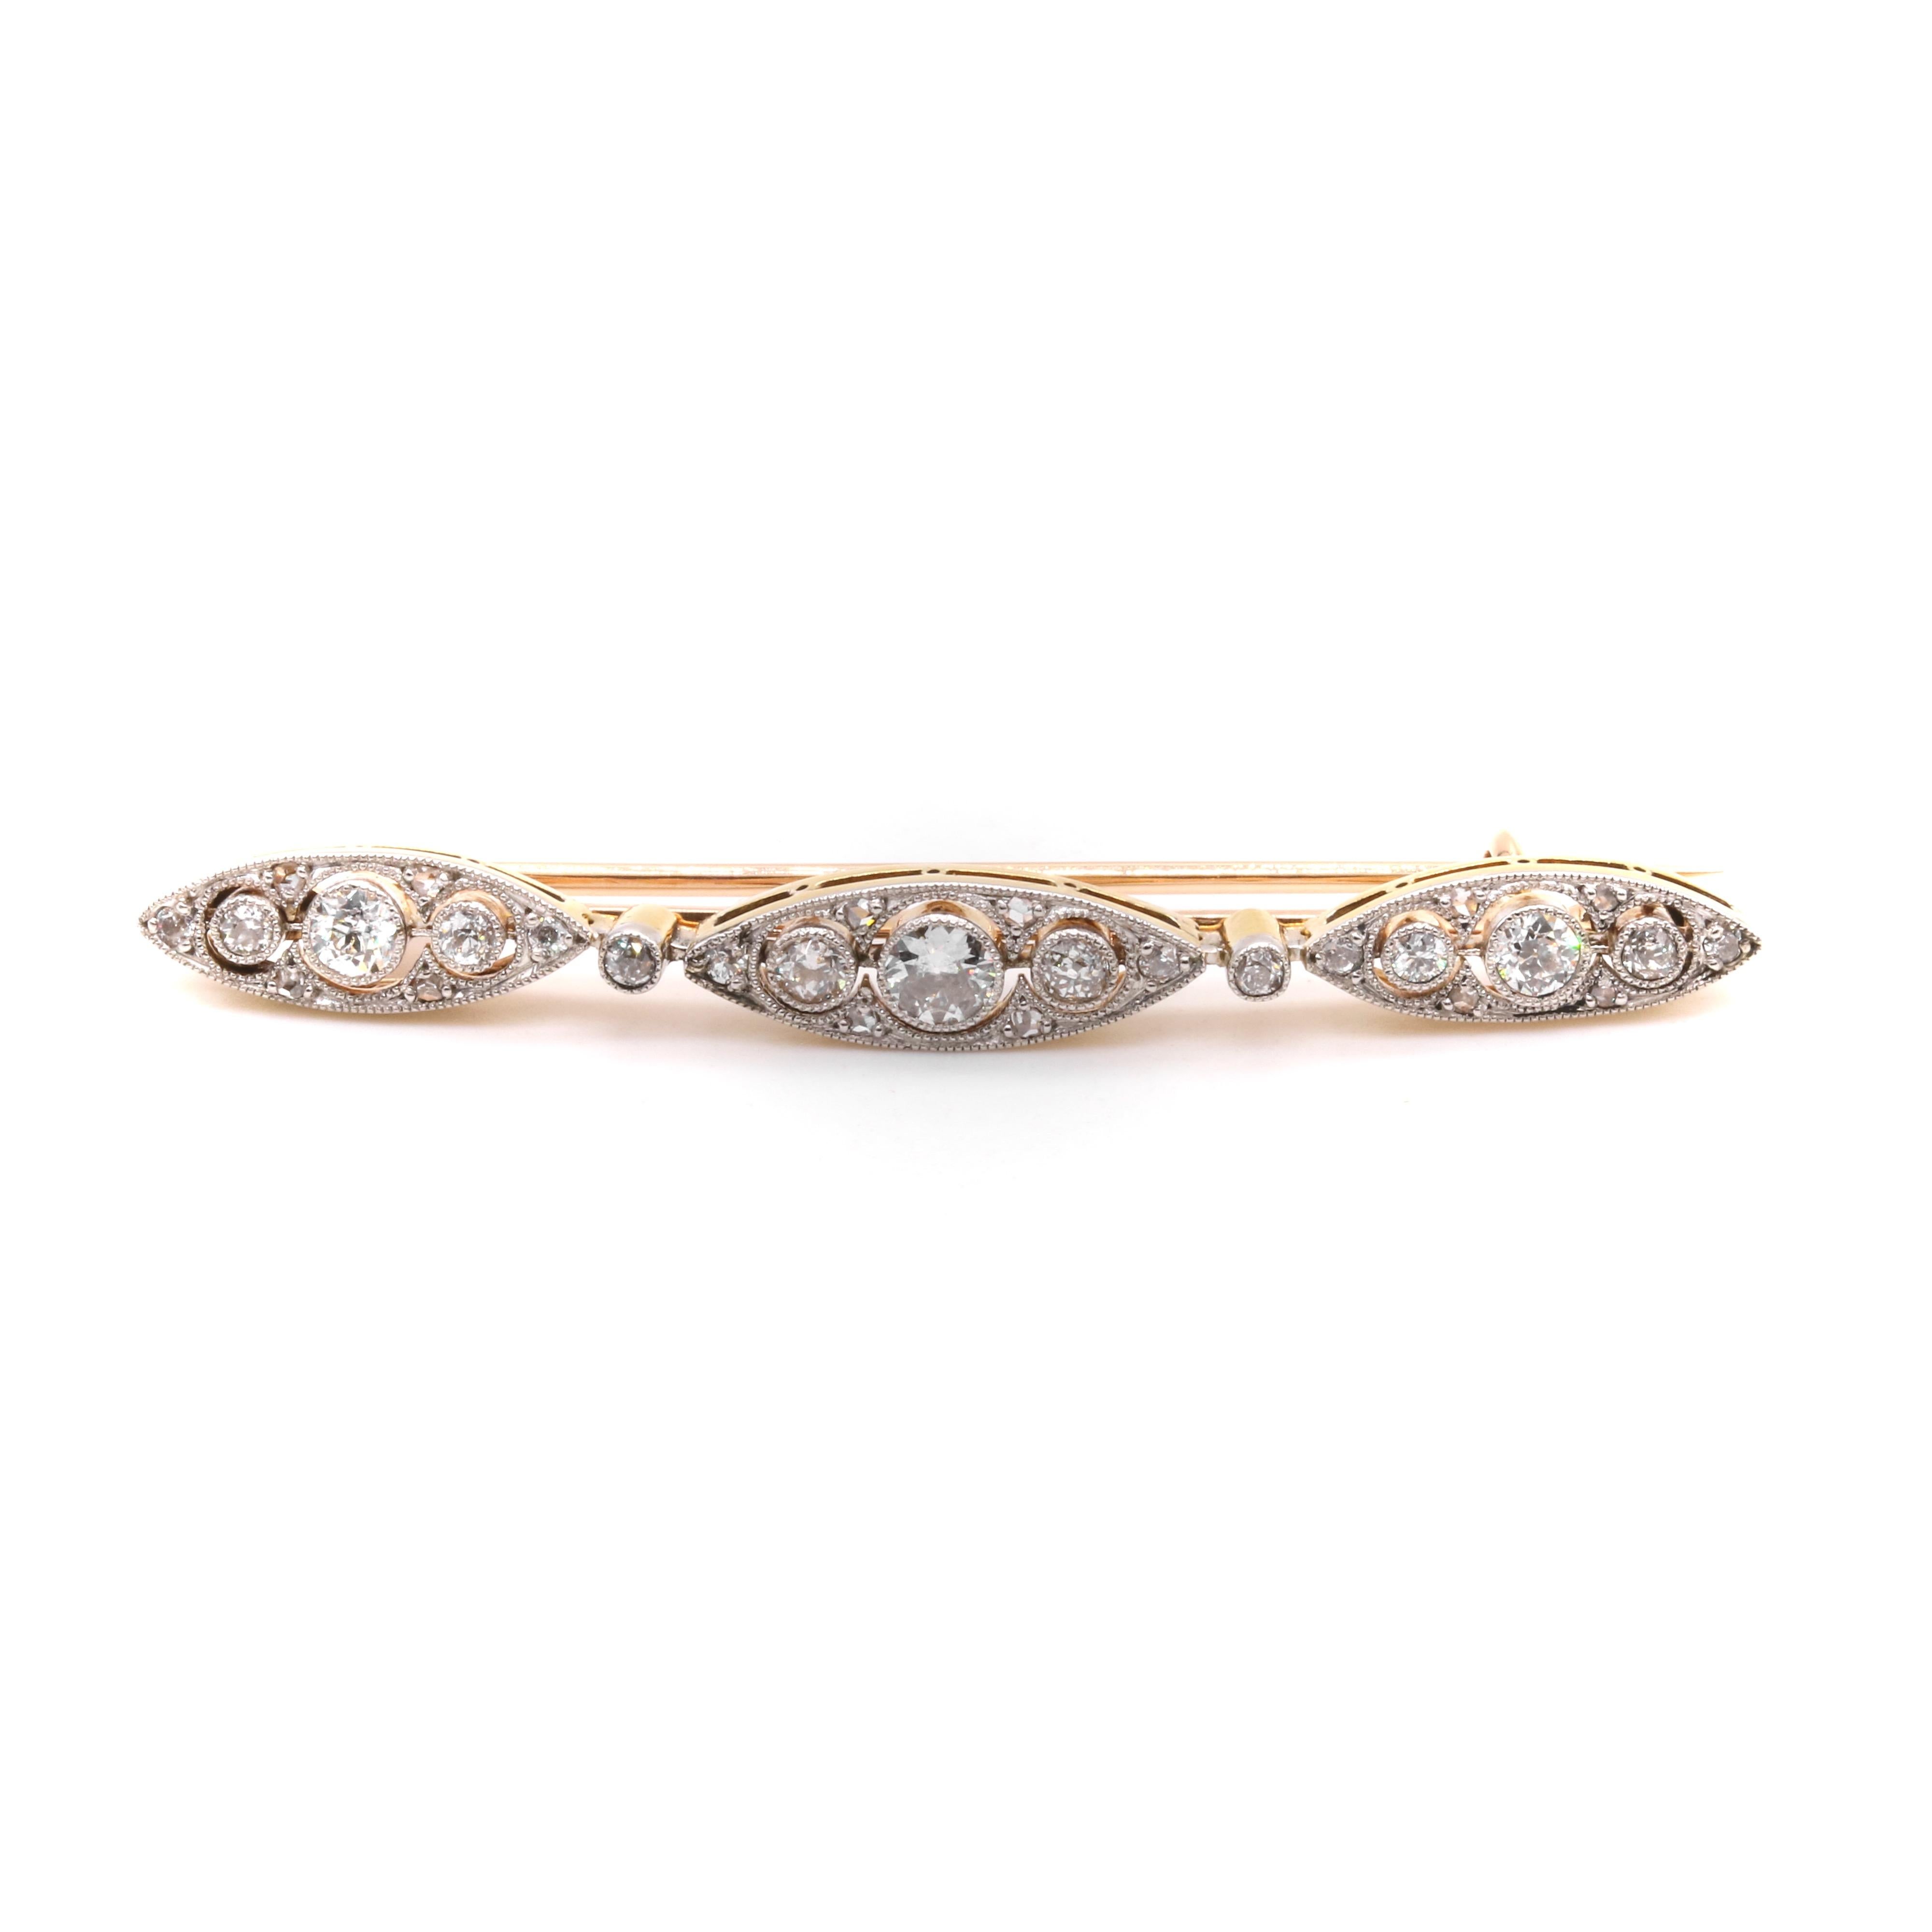 Art Deco 1920s 18K Gold & Platinum 1.3ctw Diamond Bracelet or Brooch For Sale 3